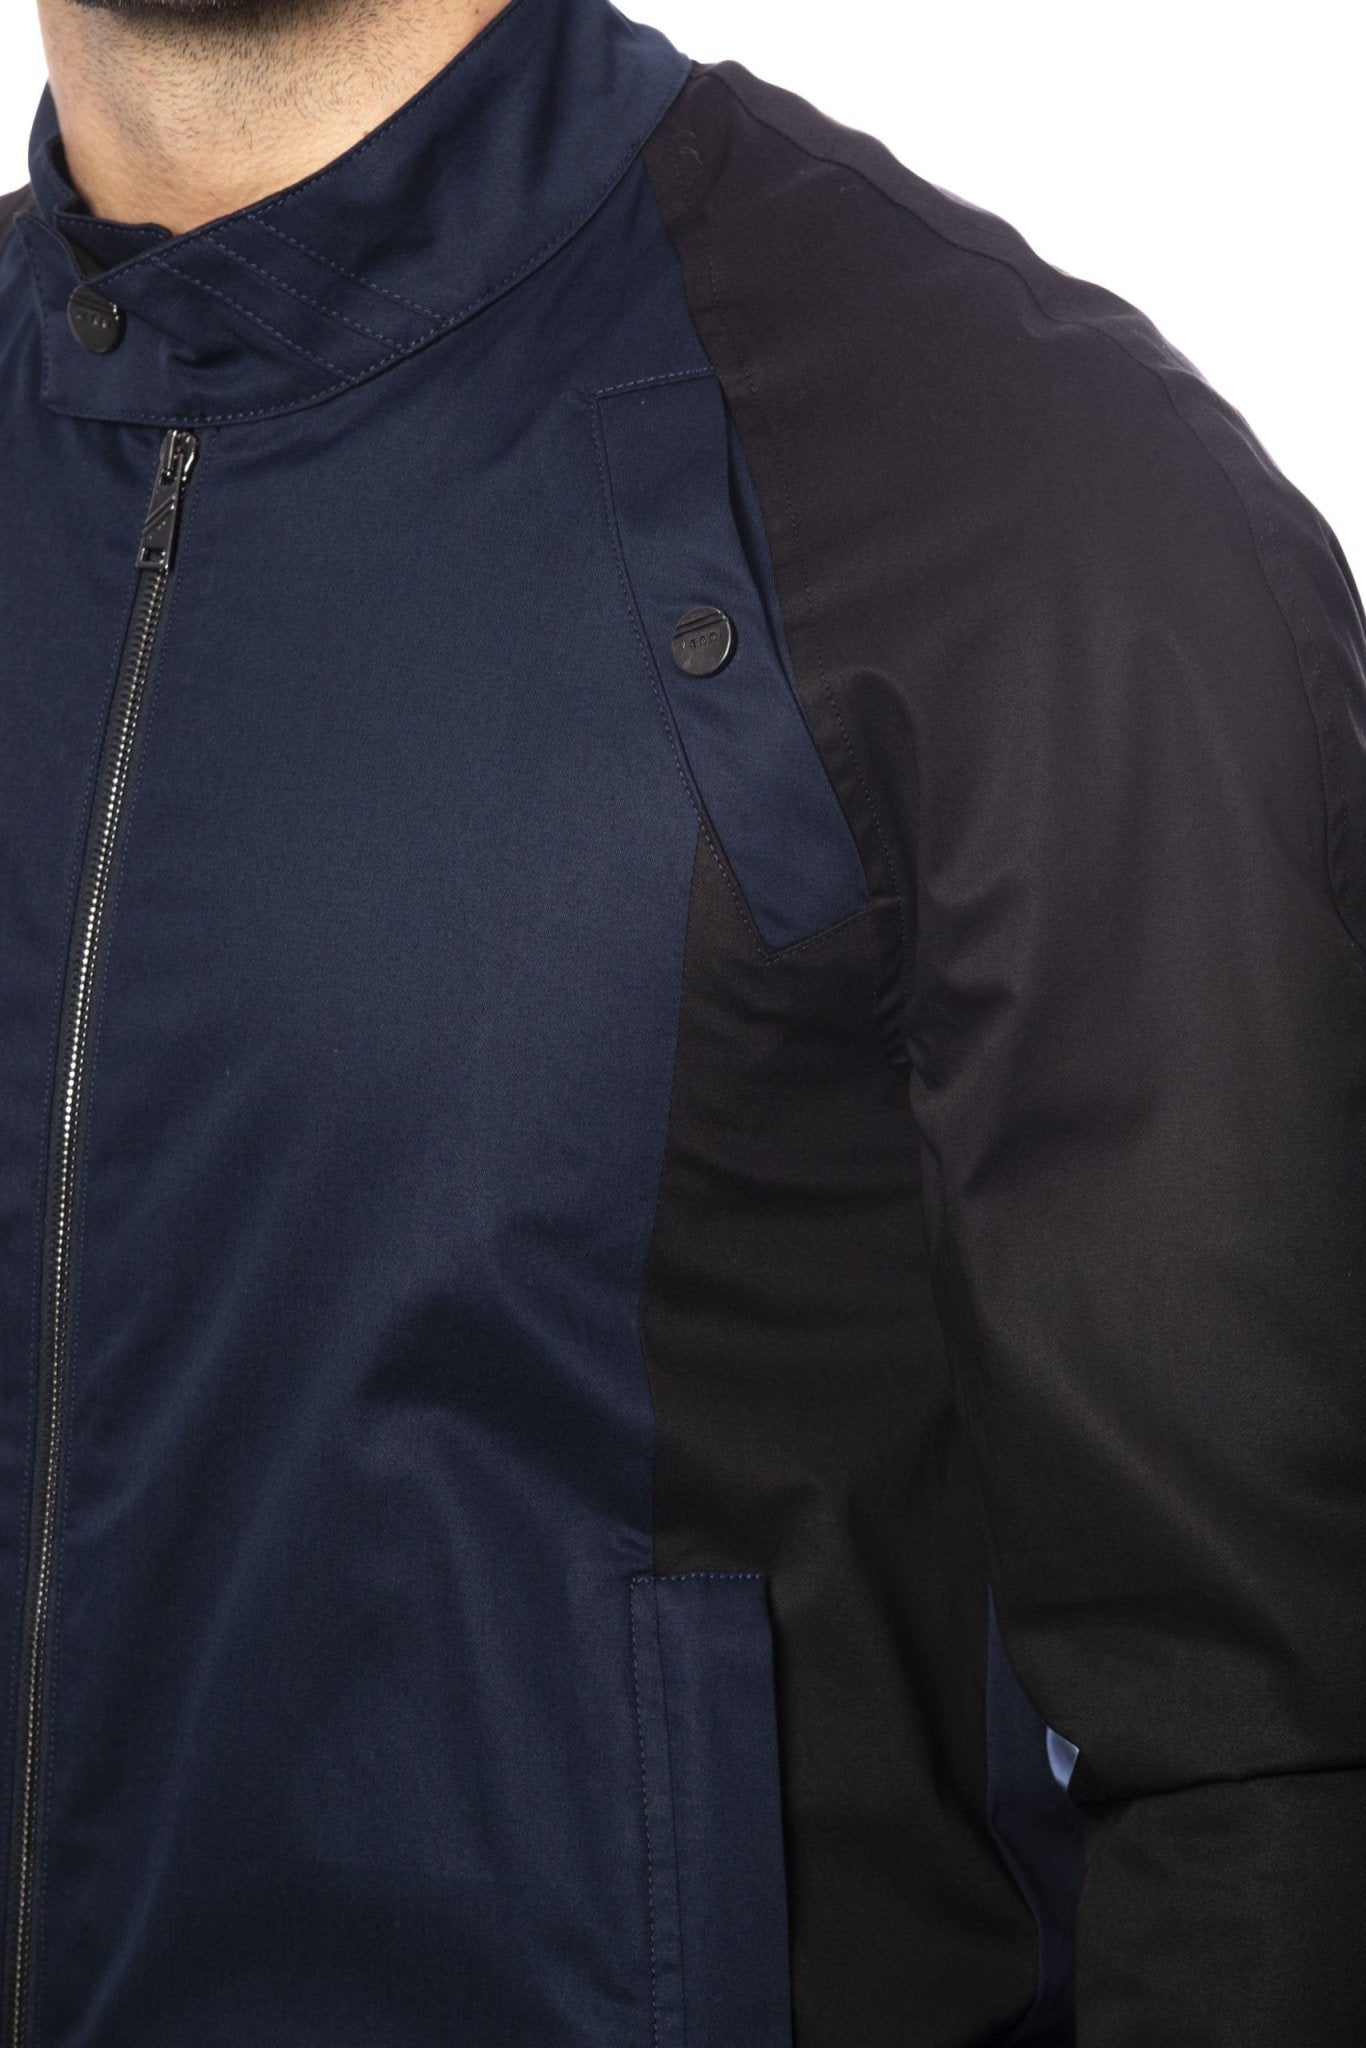 Verri Blue Cotton Jacket - Fizigo